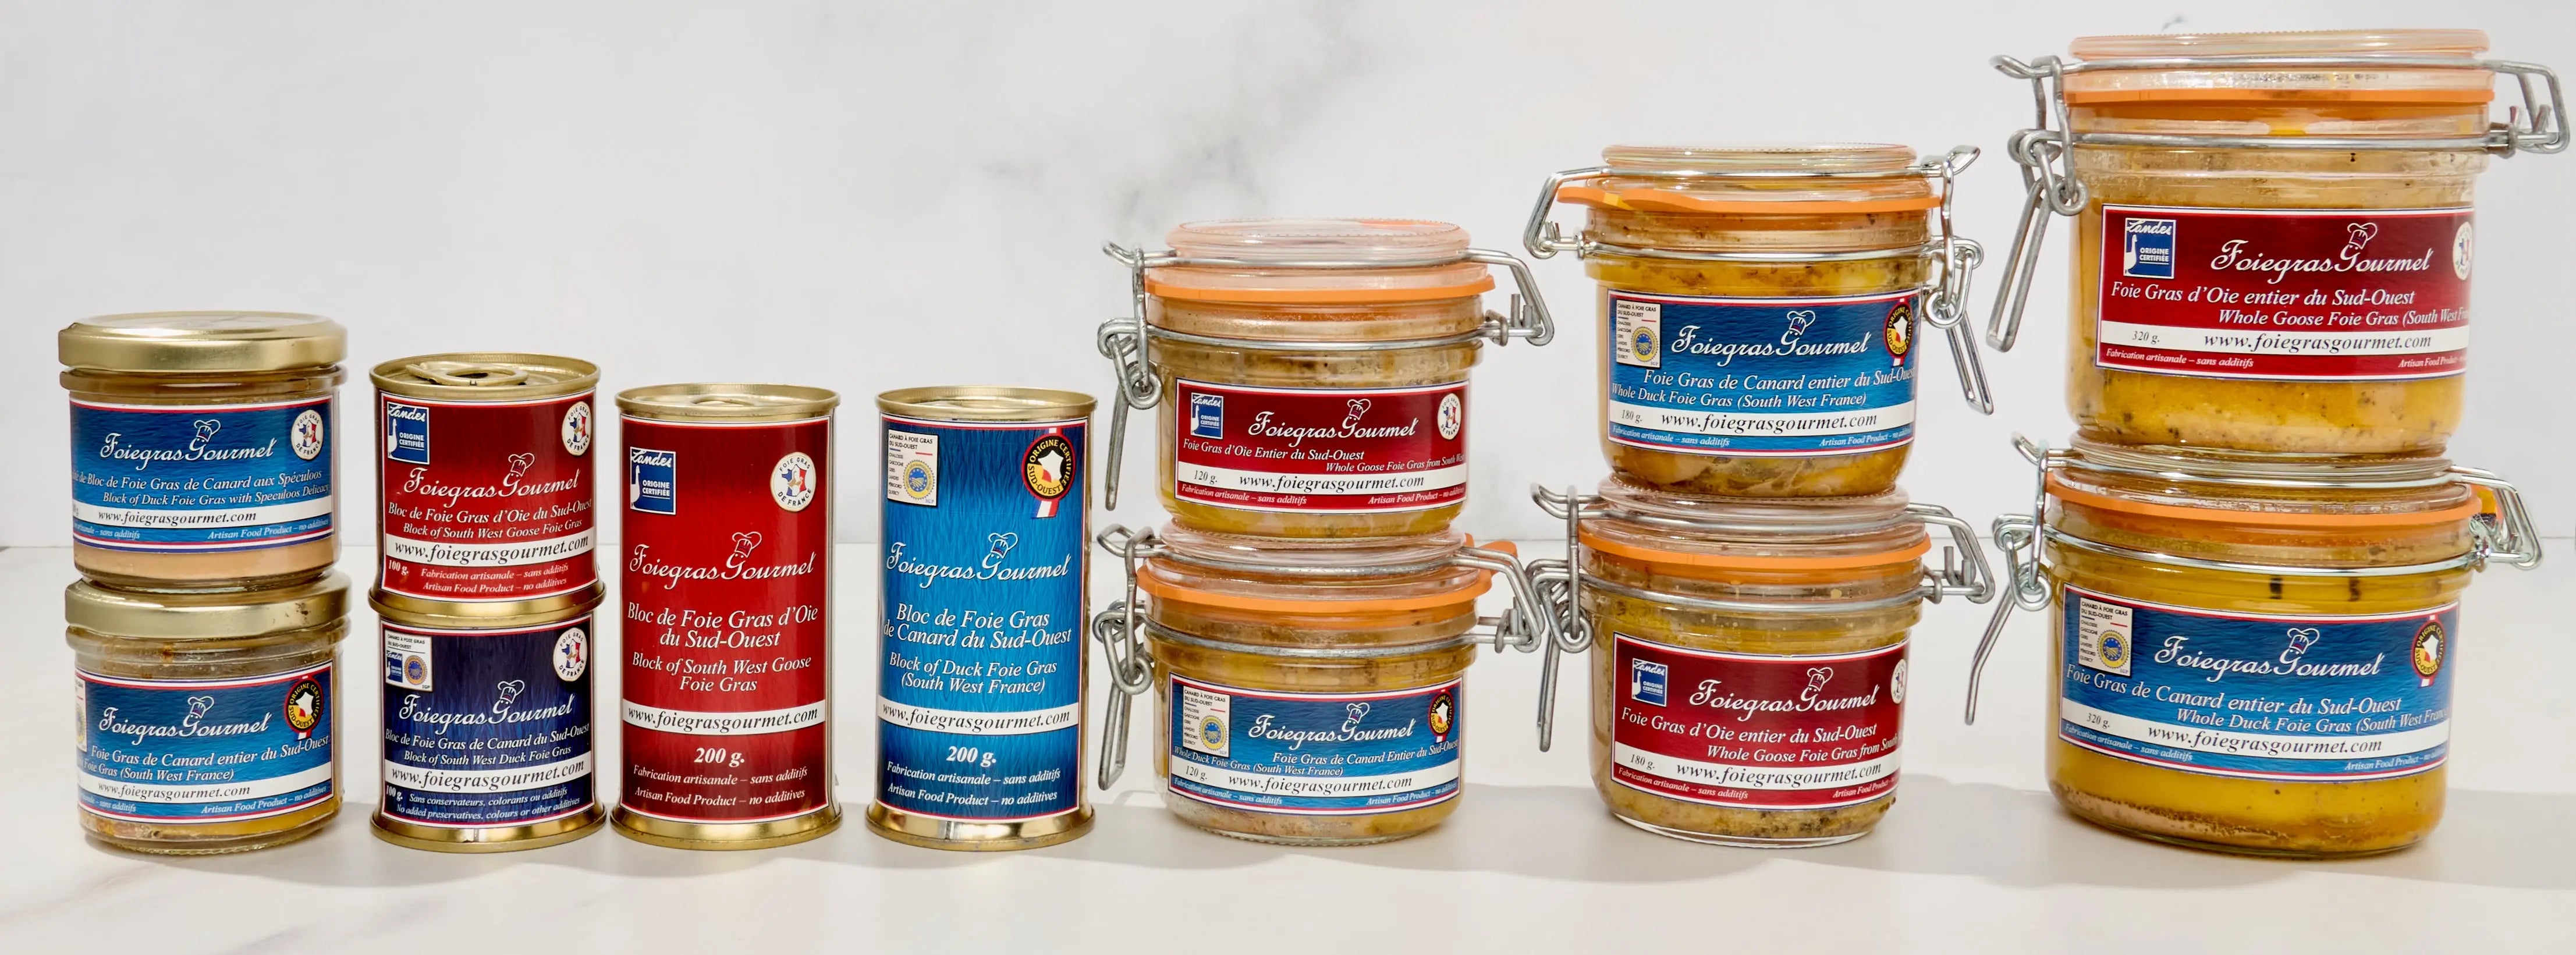 Foie gras de canard cru 1 er Choix (Dandieu - Landes France) - Bouc